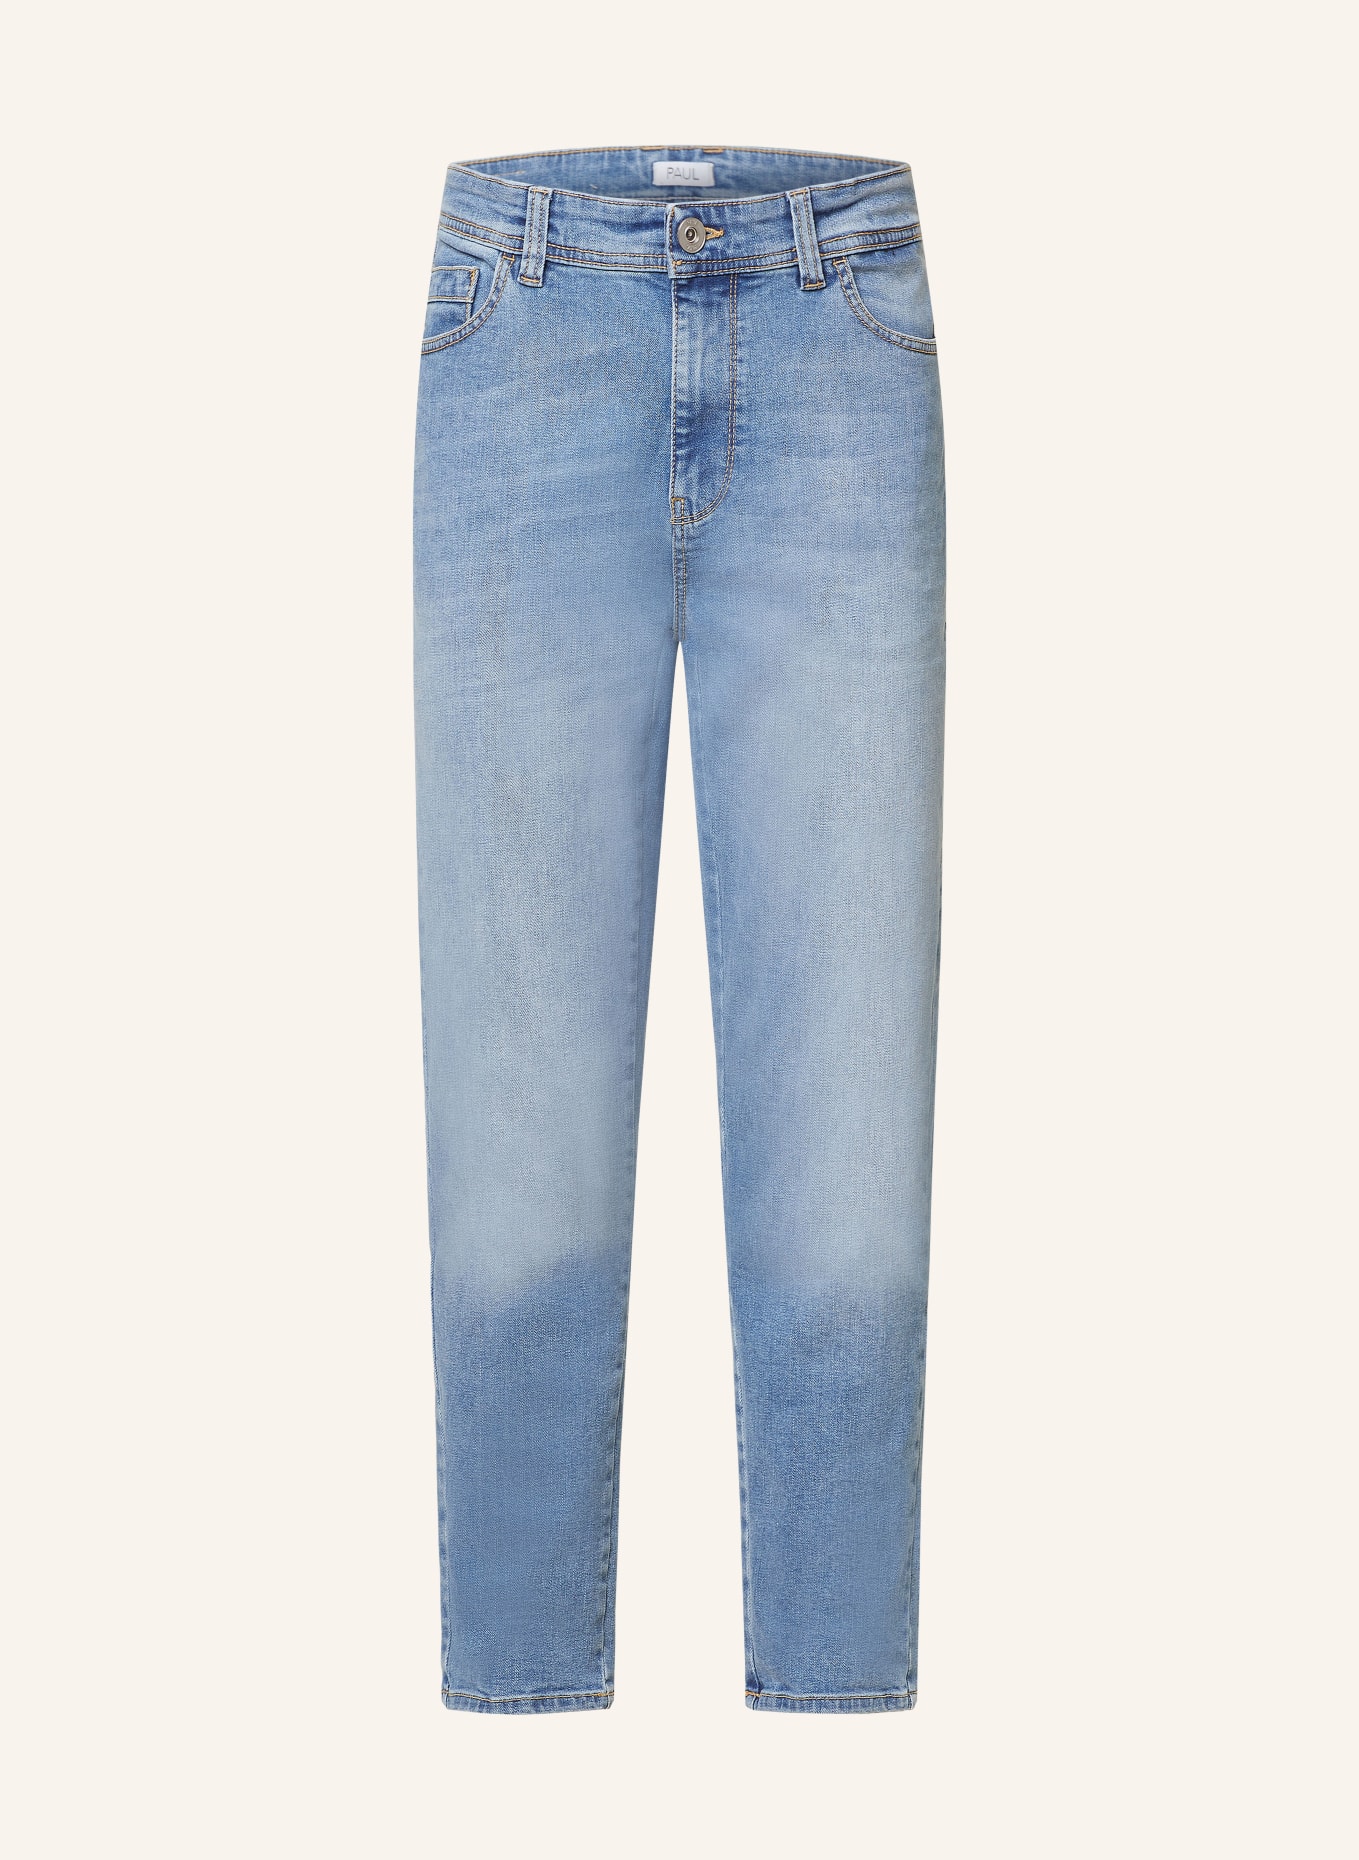 PAUL Jeans Tapered Fit, Farbe: 4183 light blue (Bild 1)